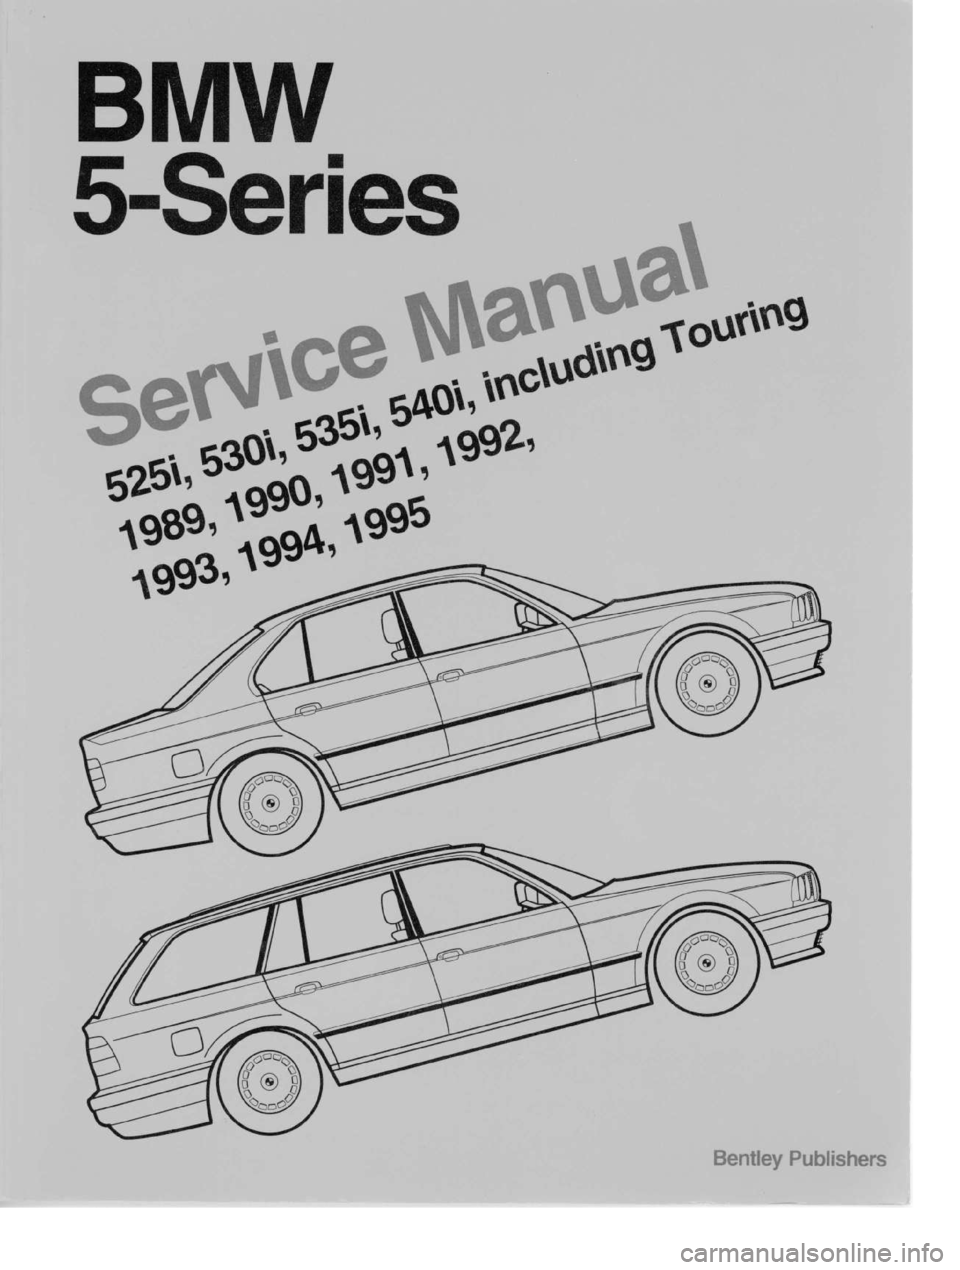 BMW 328i 1996 E36 Workshop Manual 